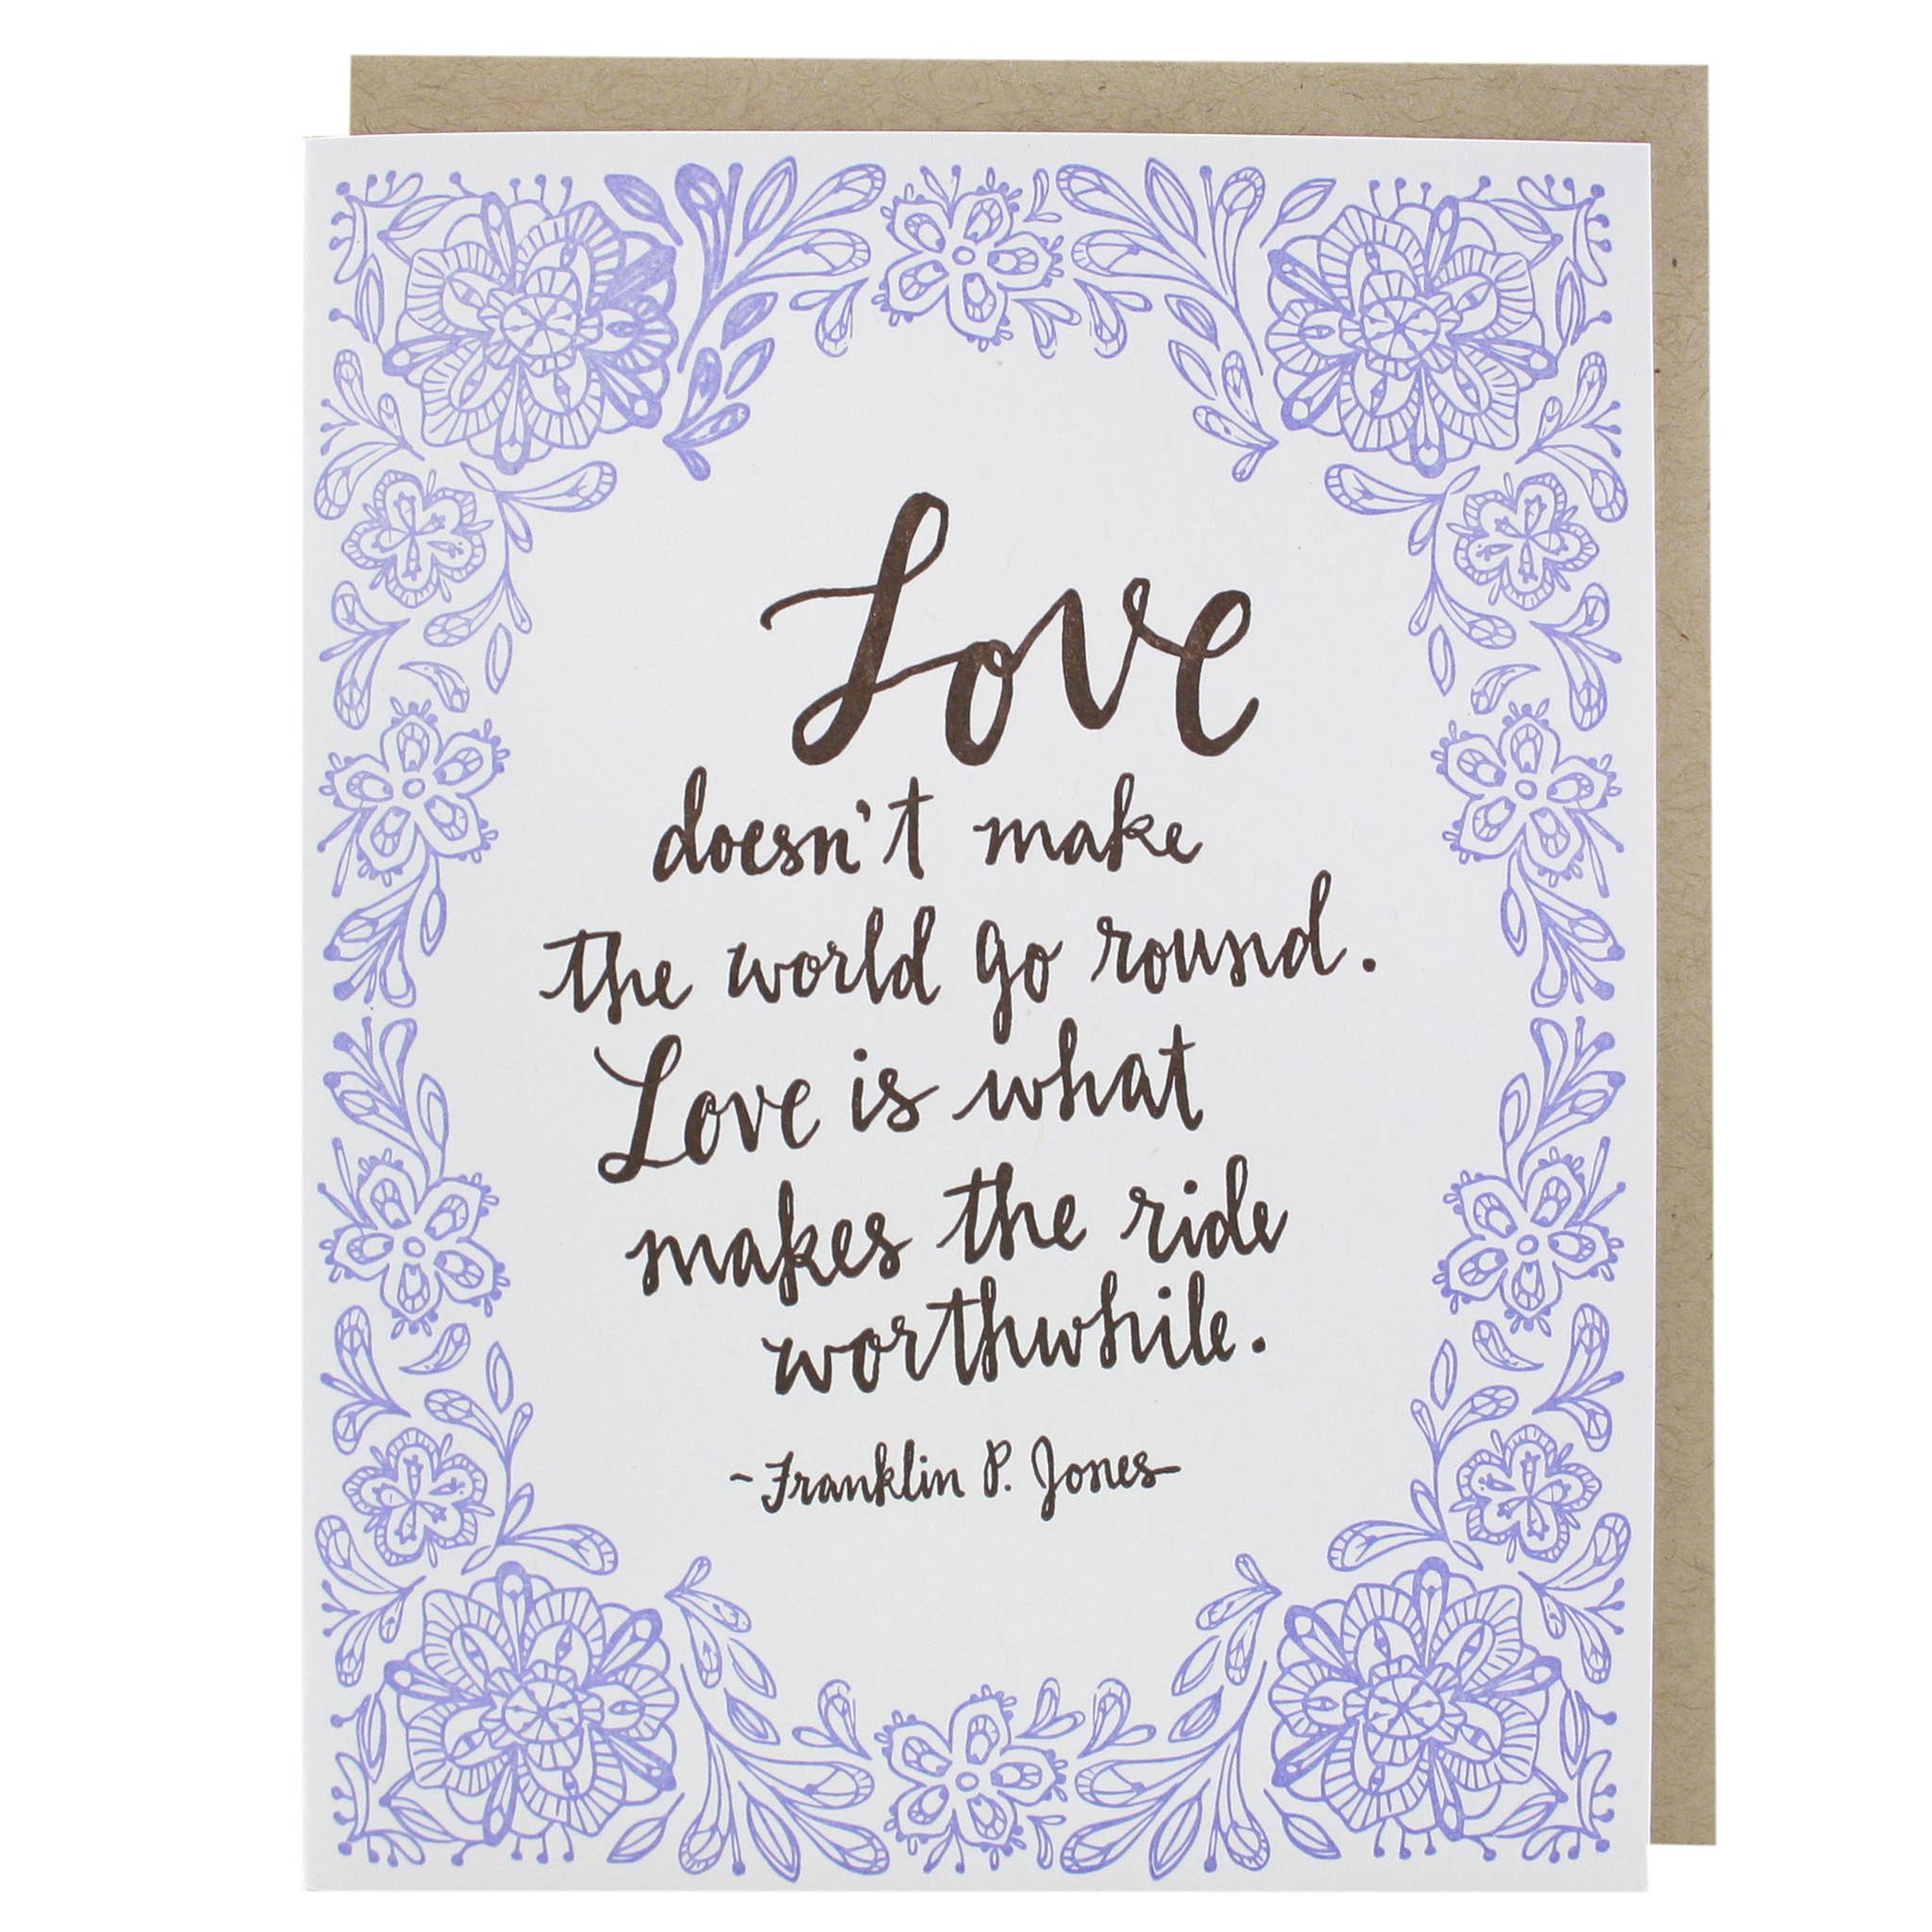 Romantic Love Quote Wedding Card